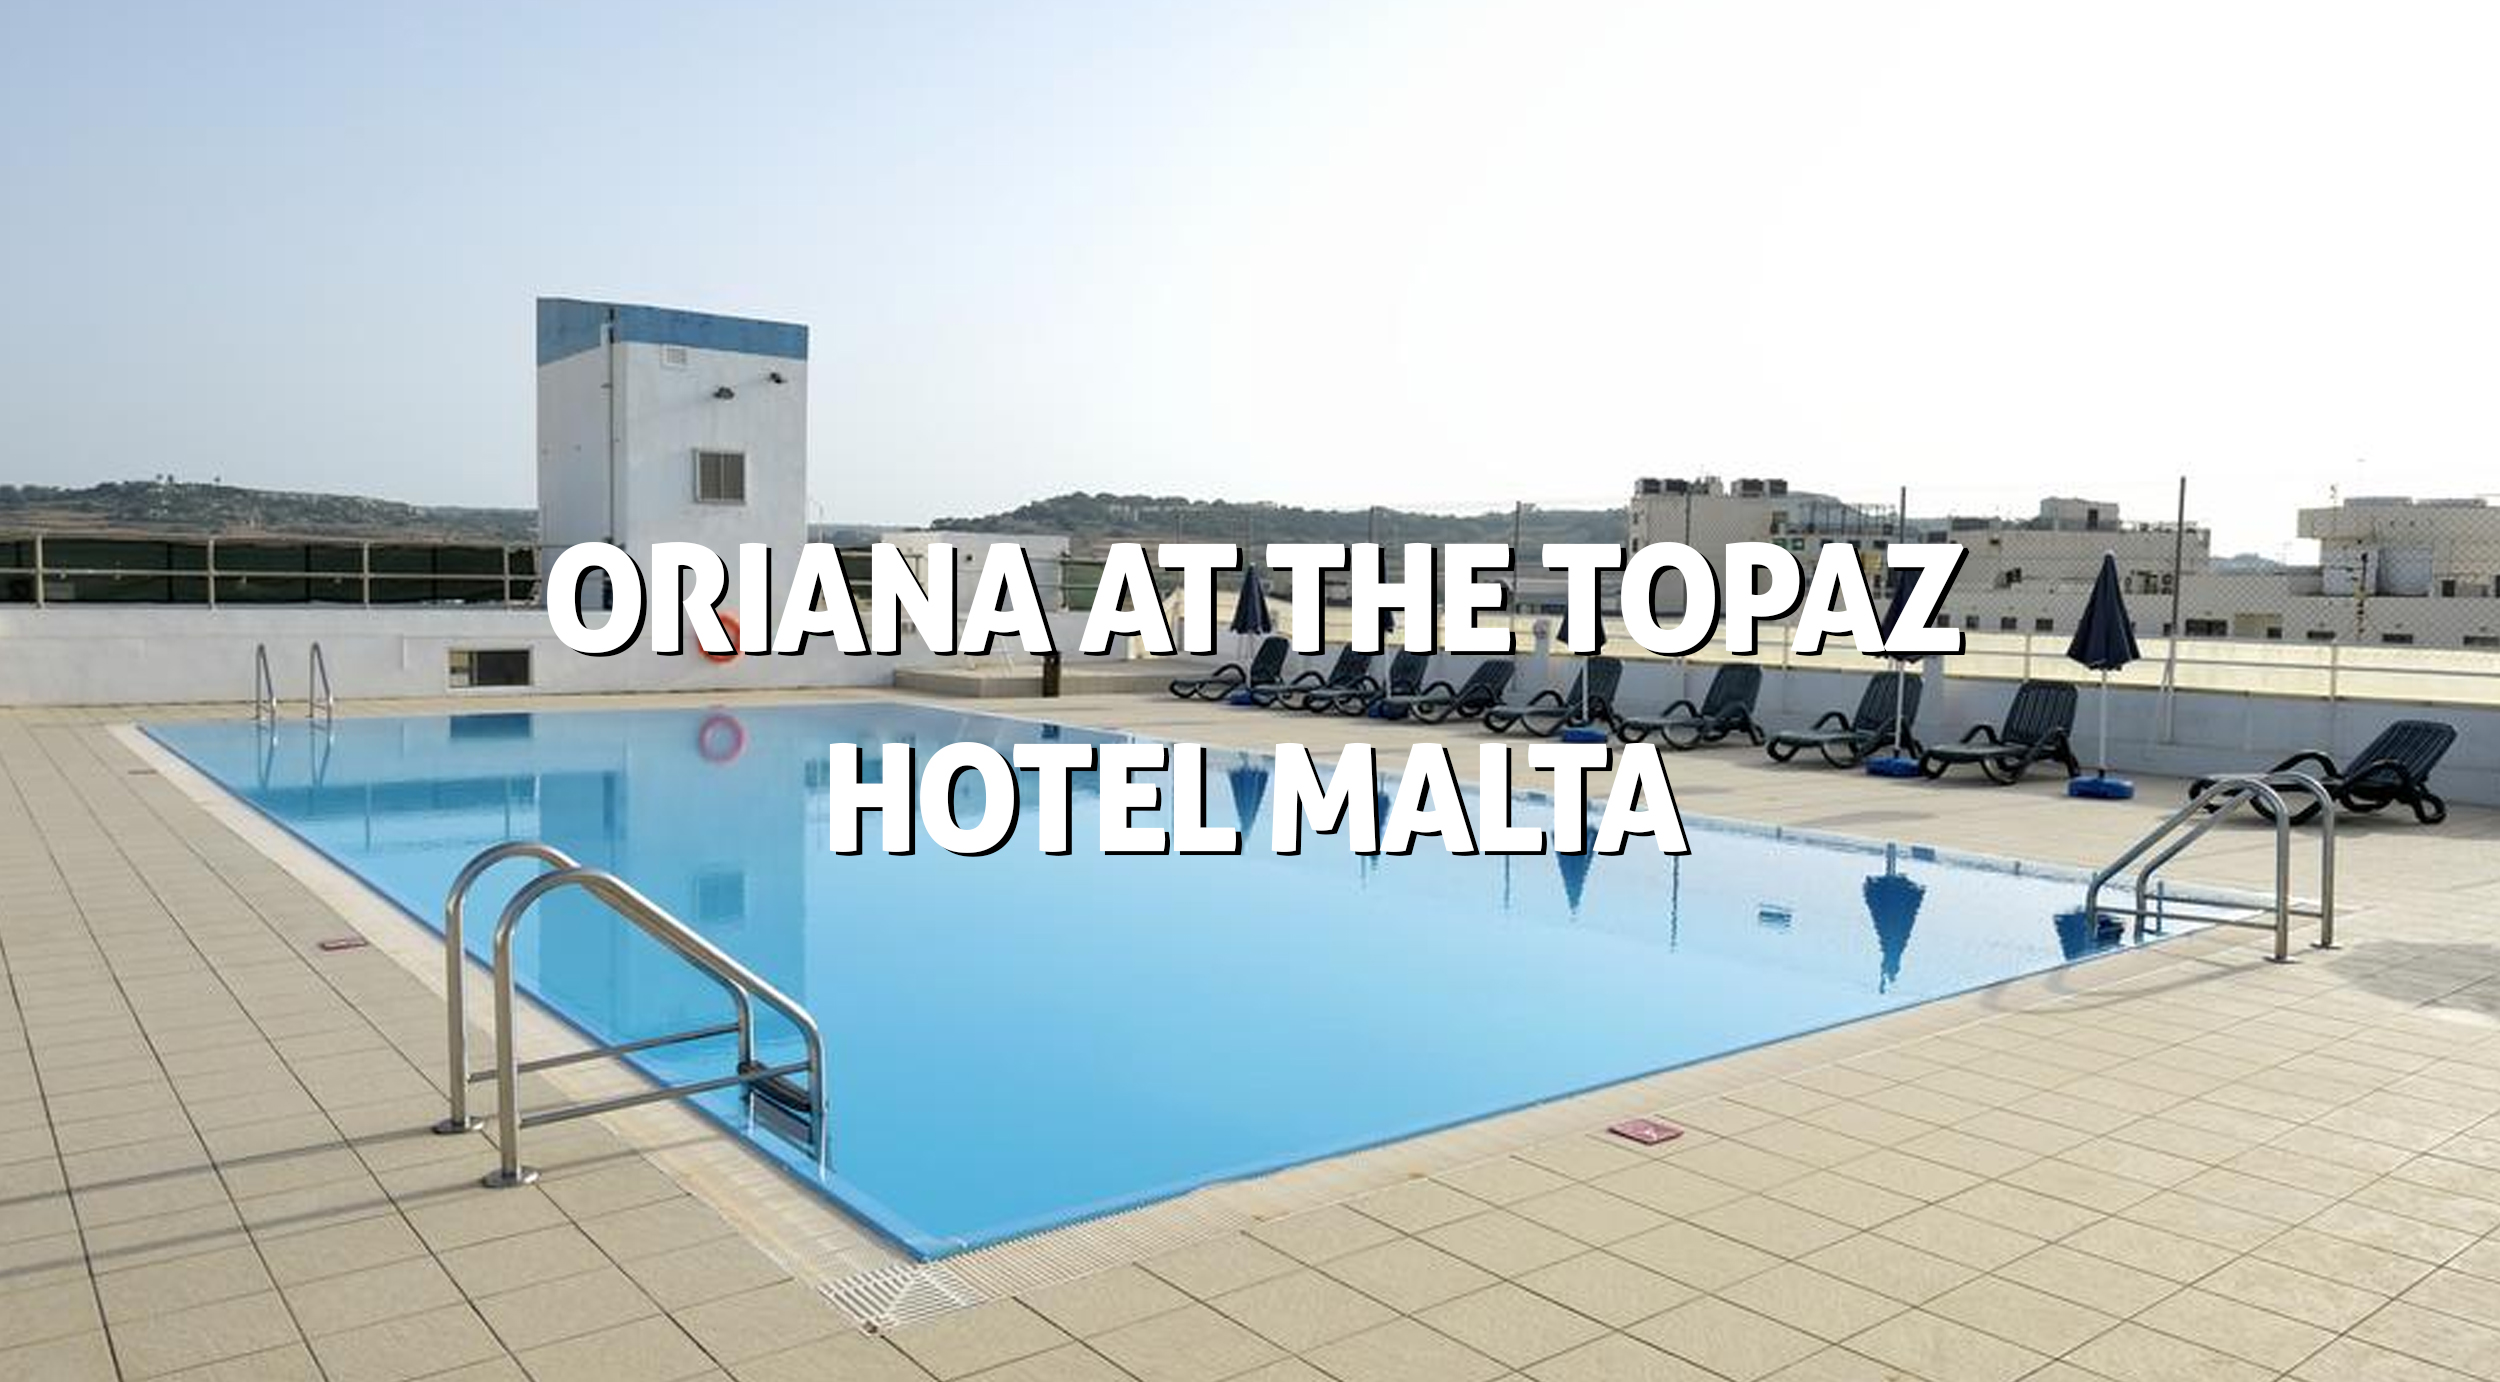 ORIANA AT THE TOPAZ HOTEL MALTA